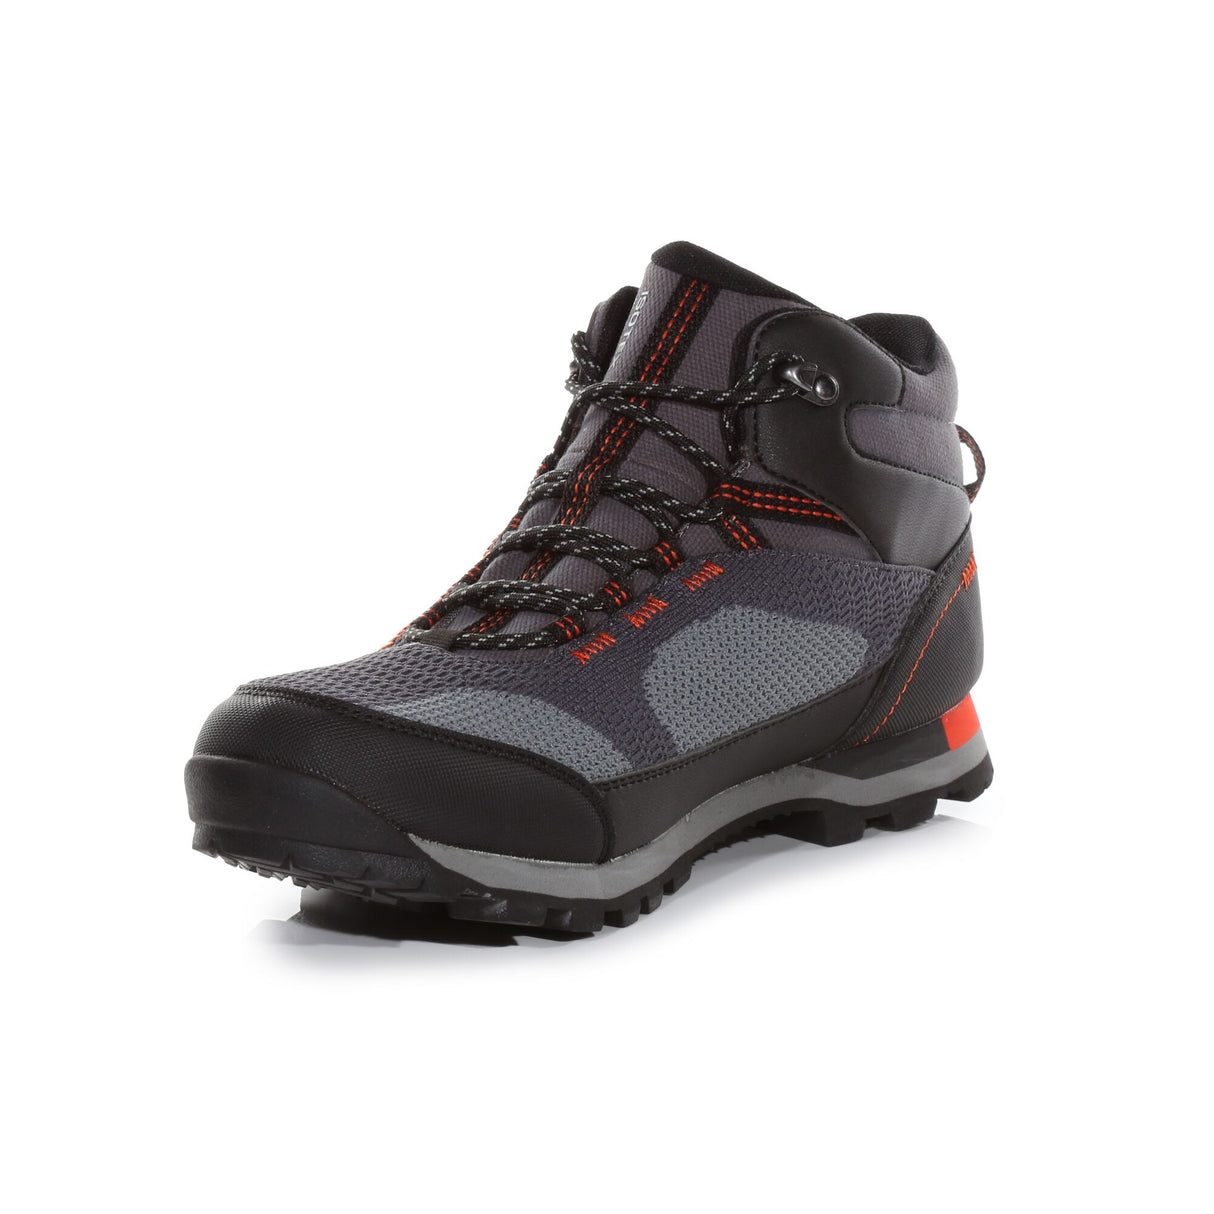 Regatta Blackthorn Evo Waterproof Walking Hiking Boots - Grey/Orange